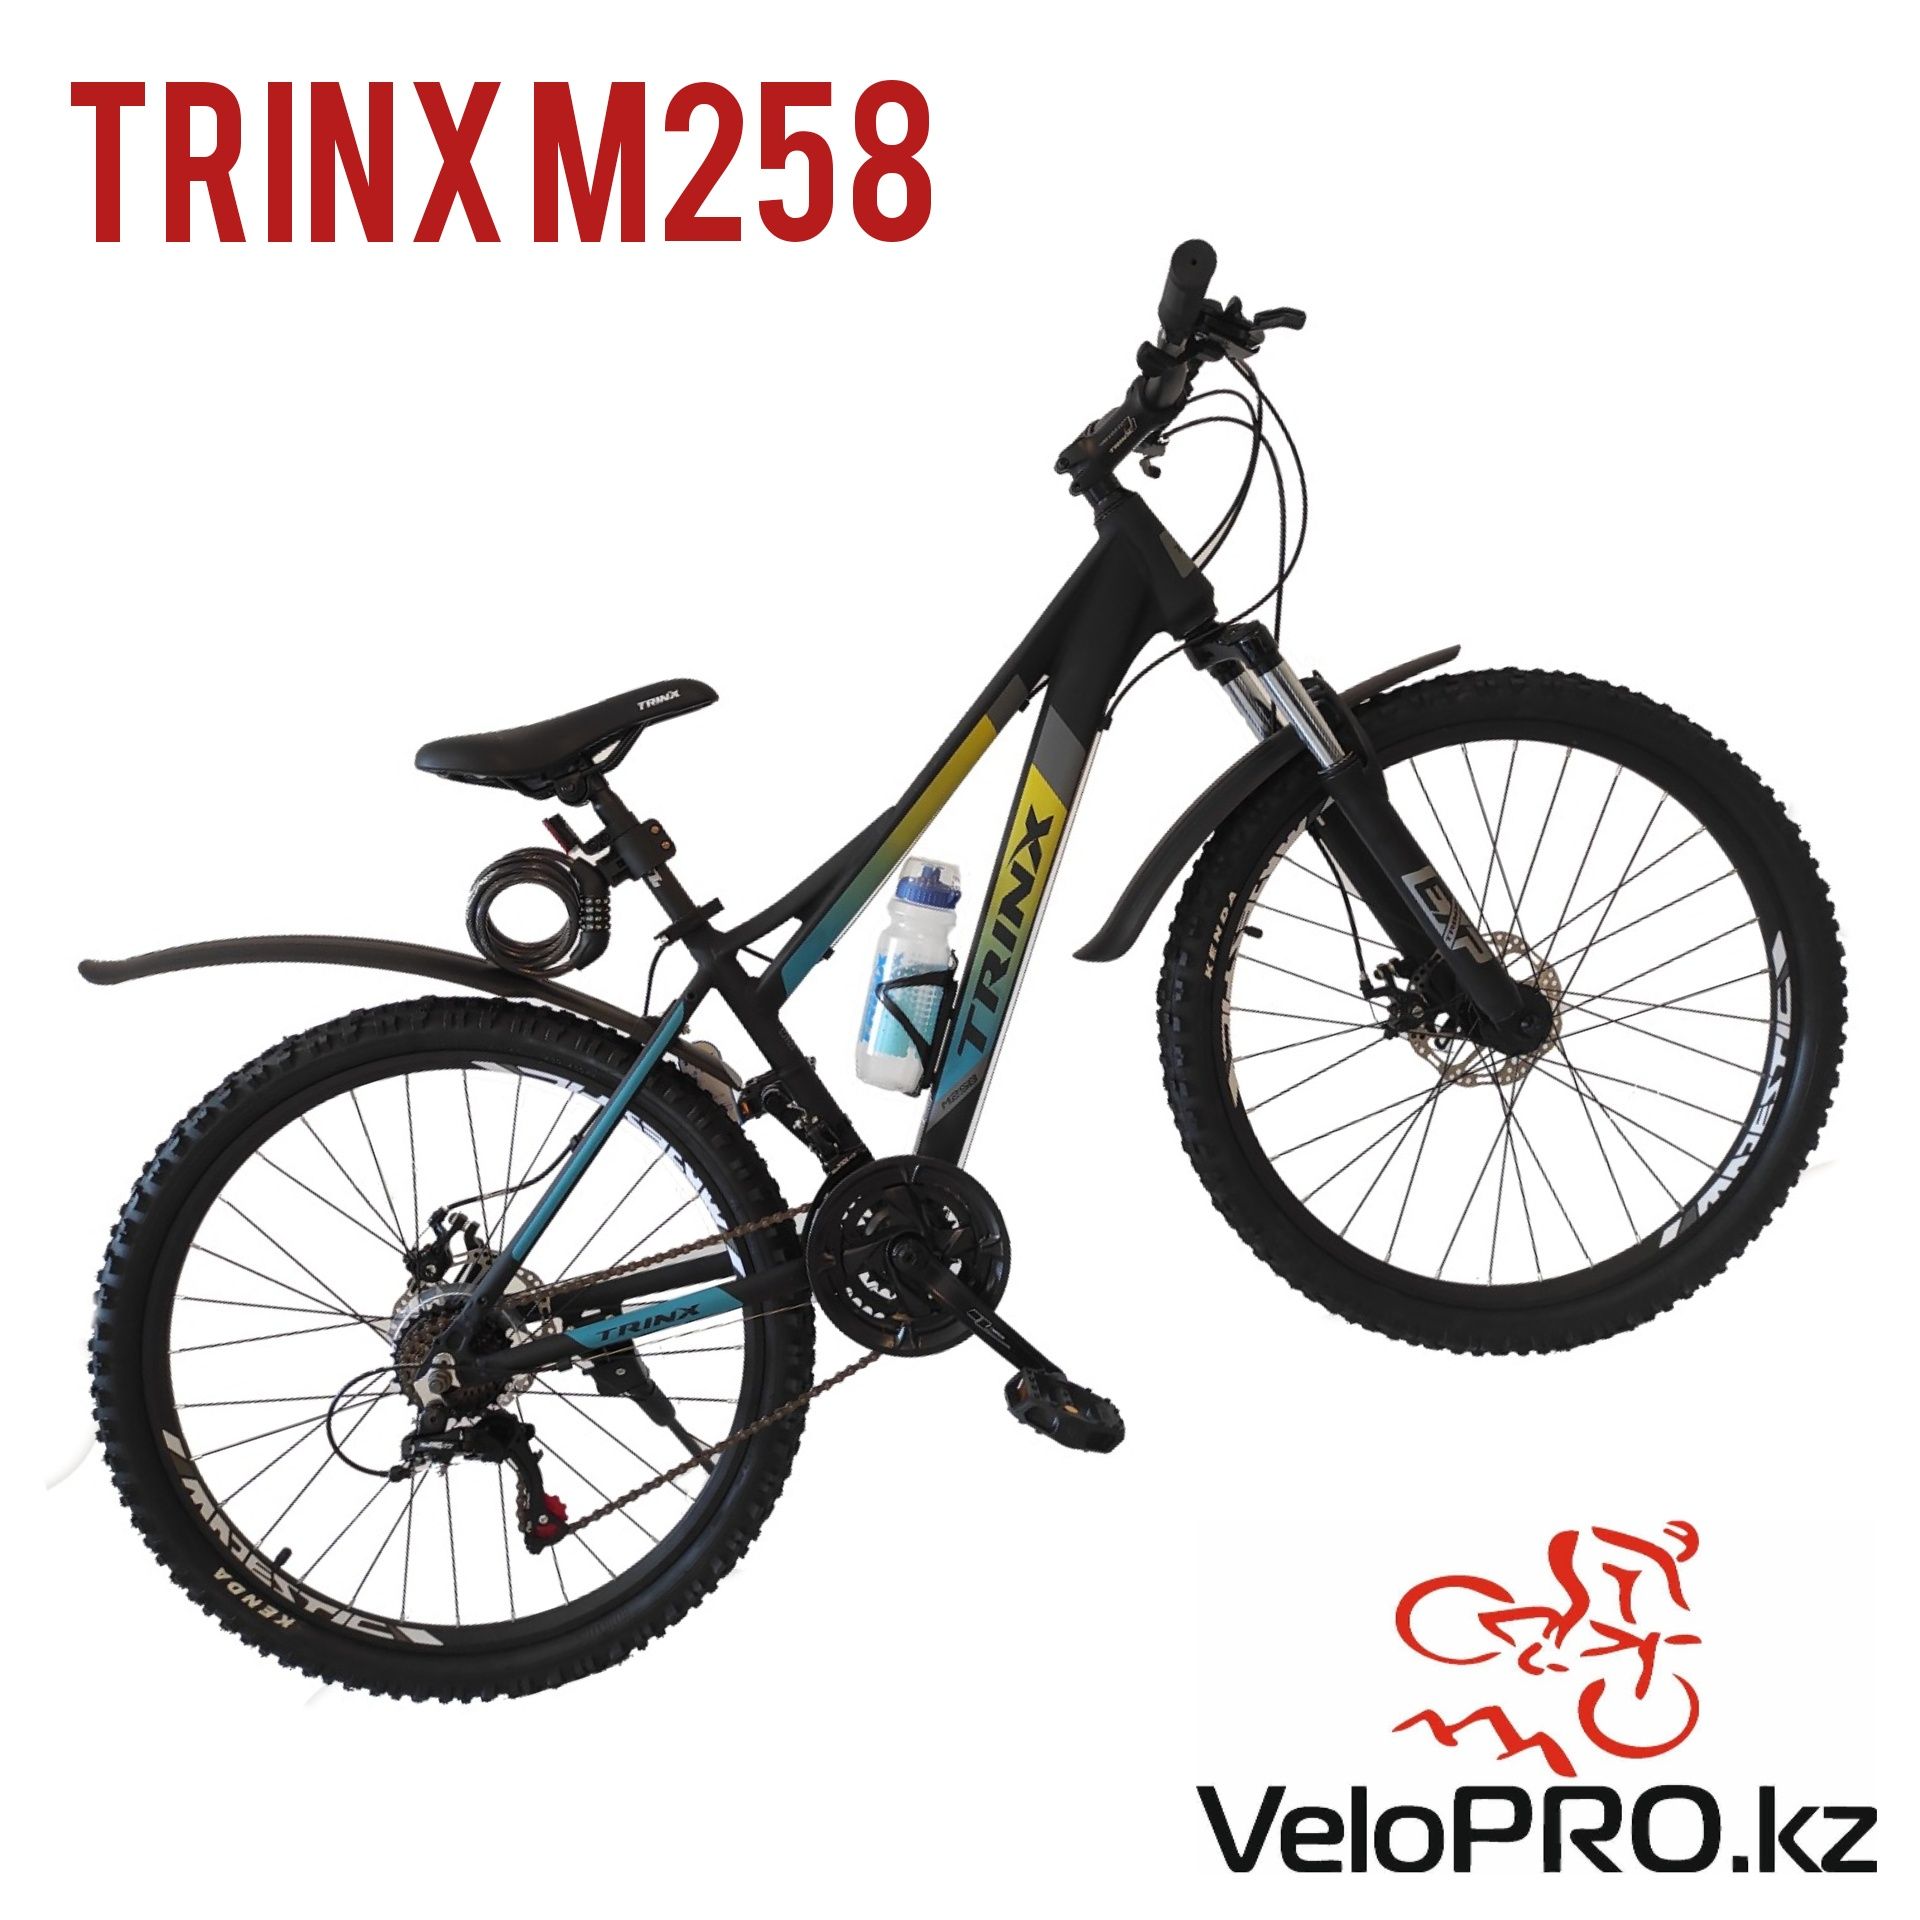 Велосипед Trinx m114, M116, M136, M500, M1000